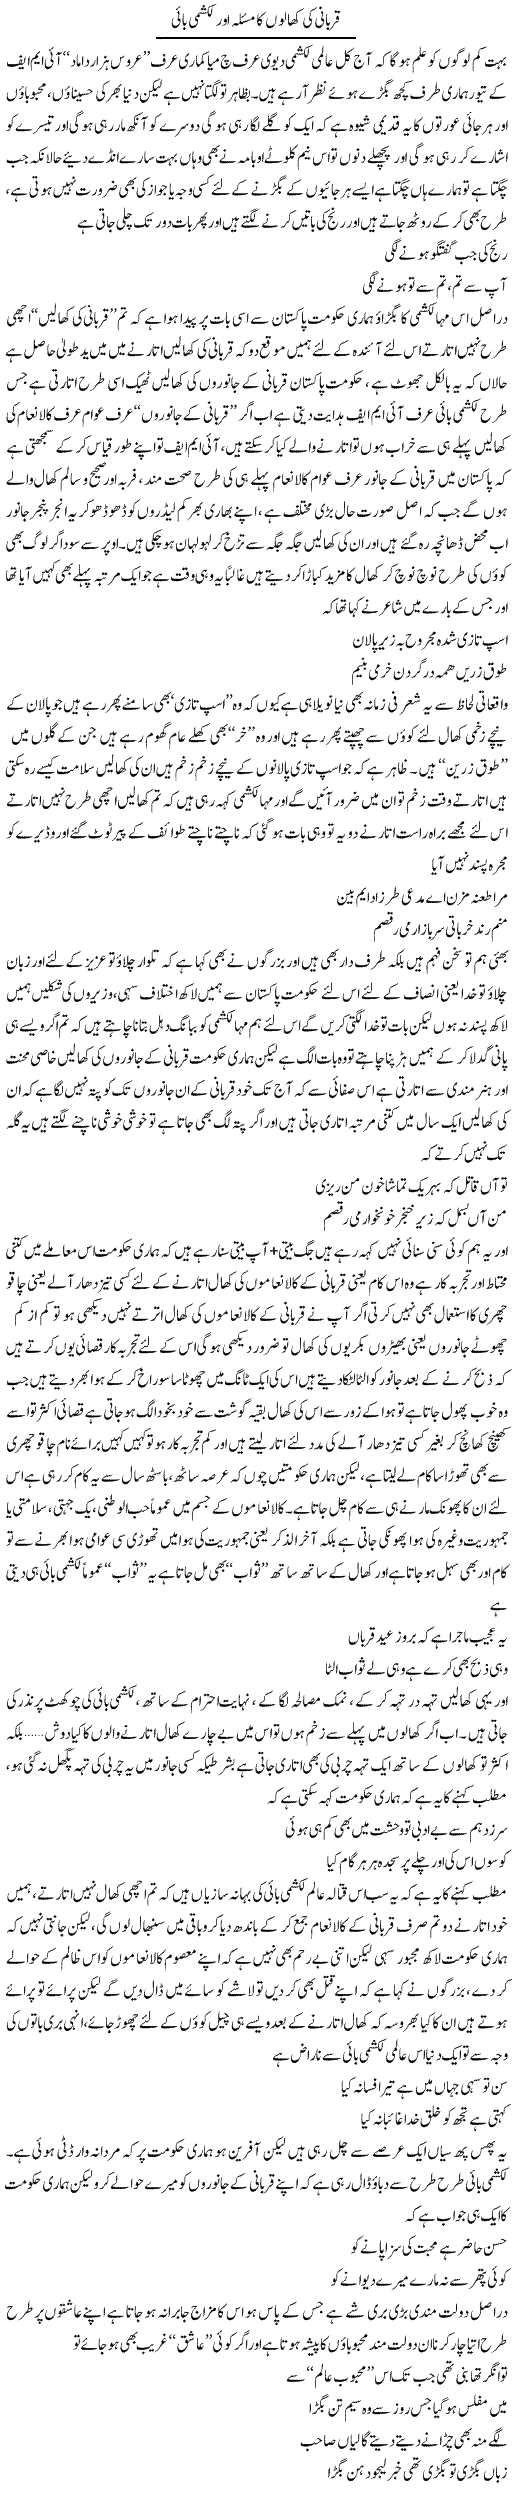 Khal of Qurbani Express Column Saadullah Barq 5 December 2010